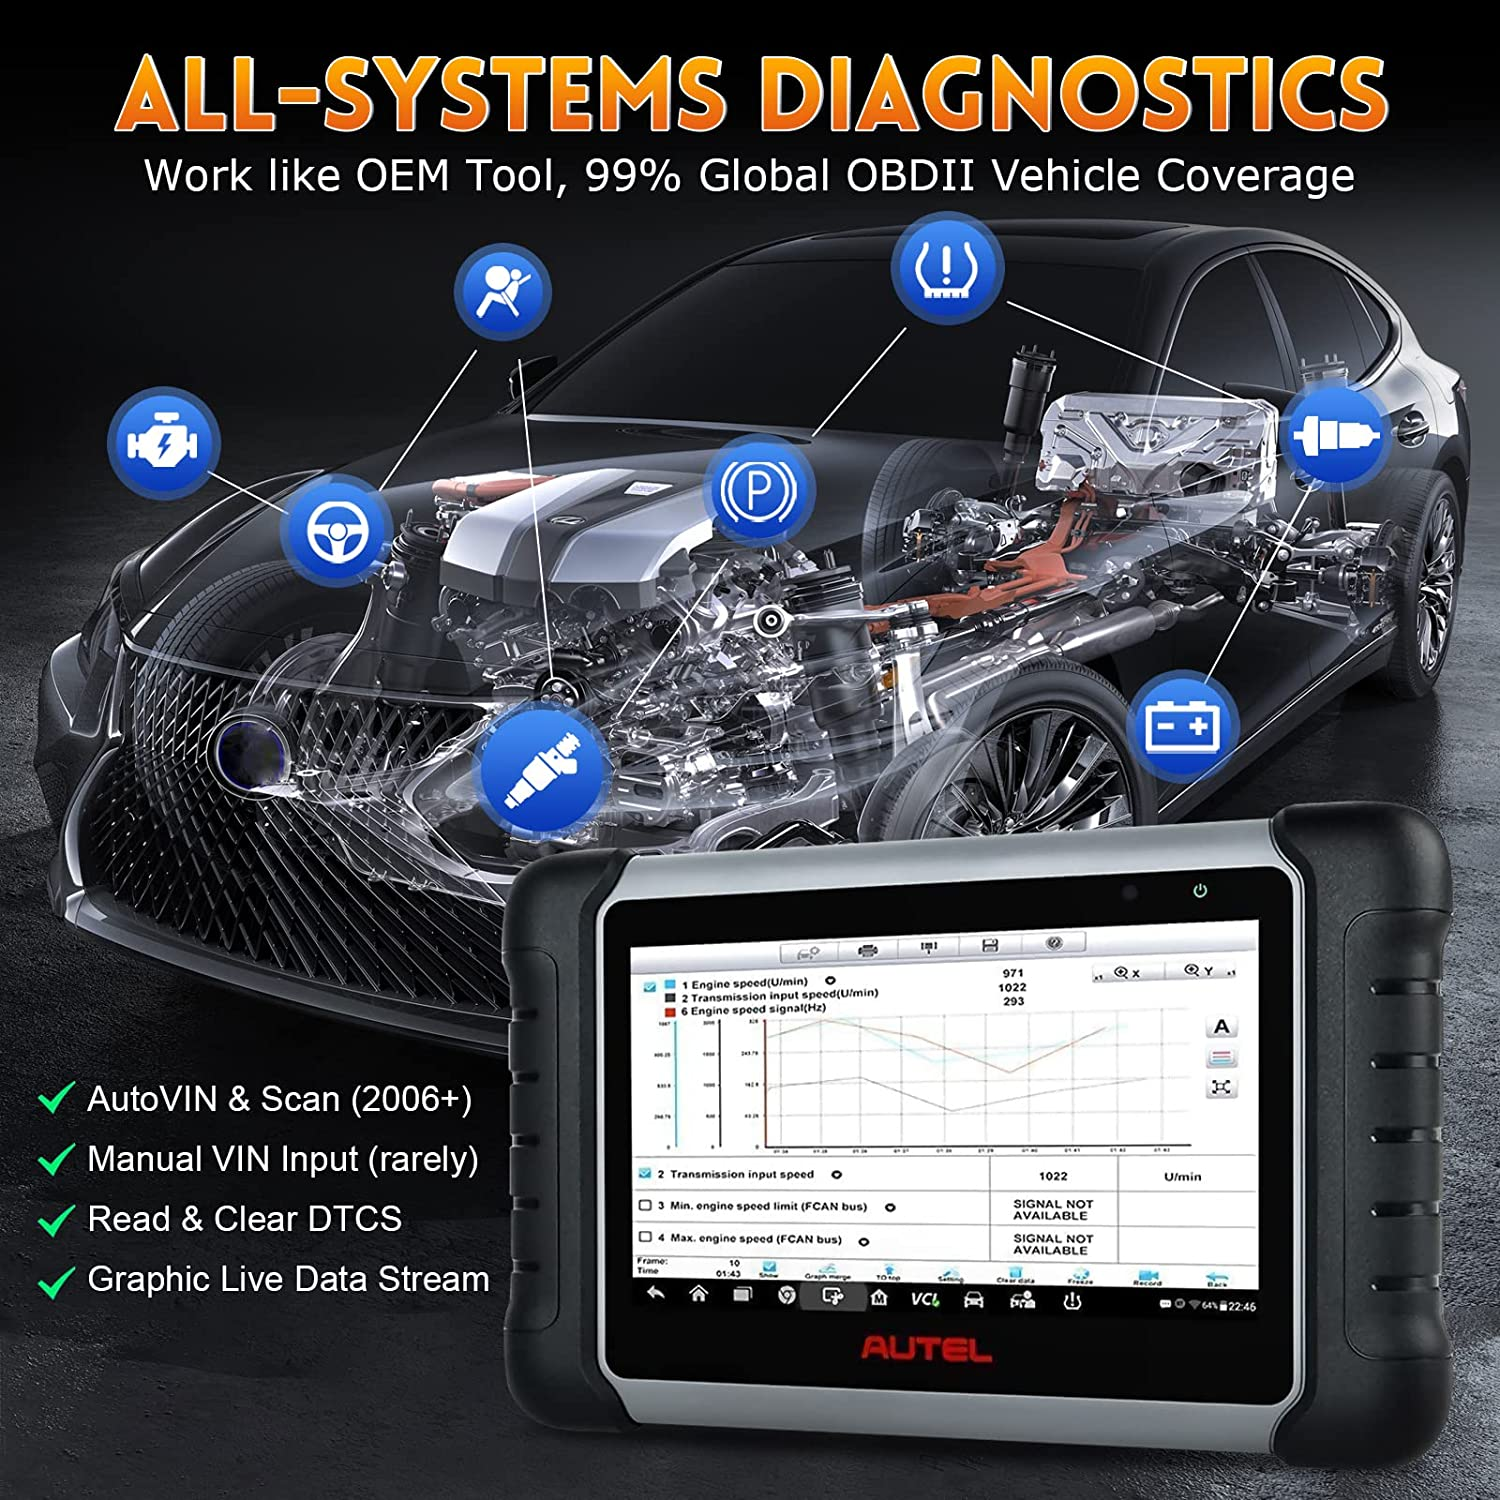 All-Systems Diagnostics by Autel MK808Z-BT